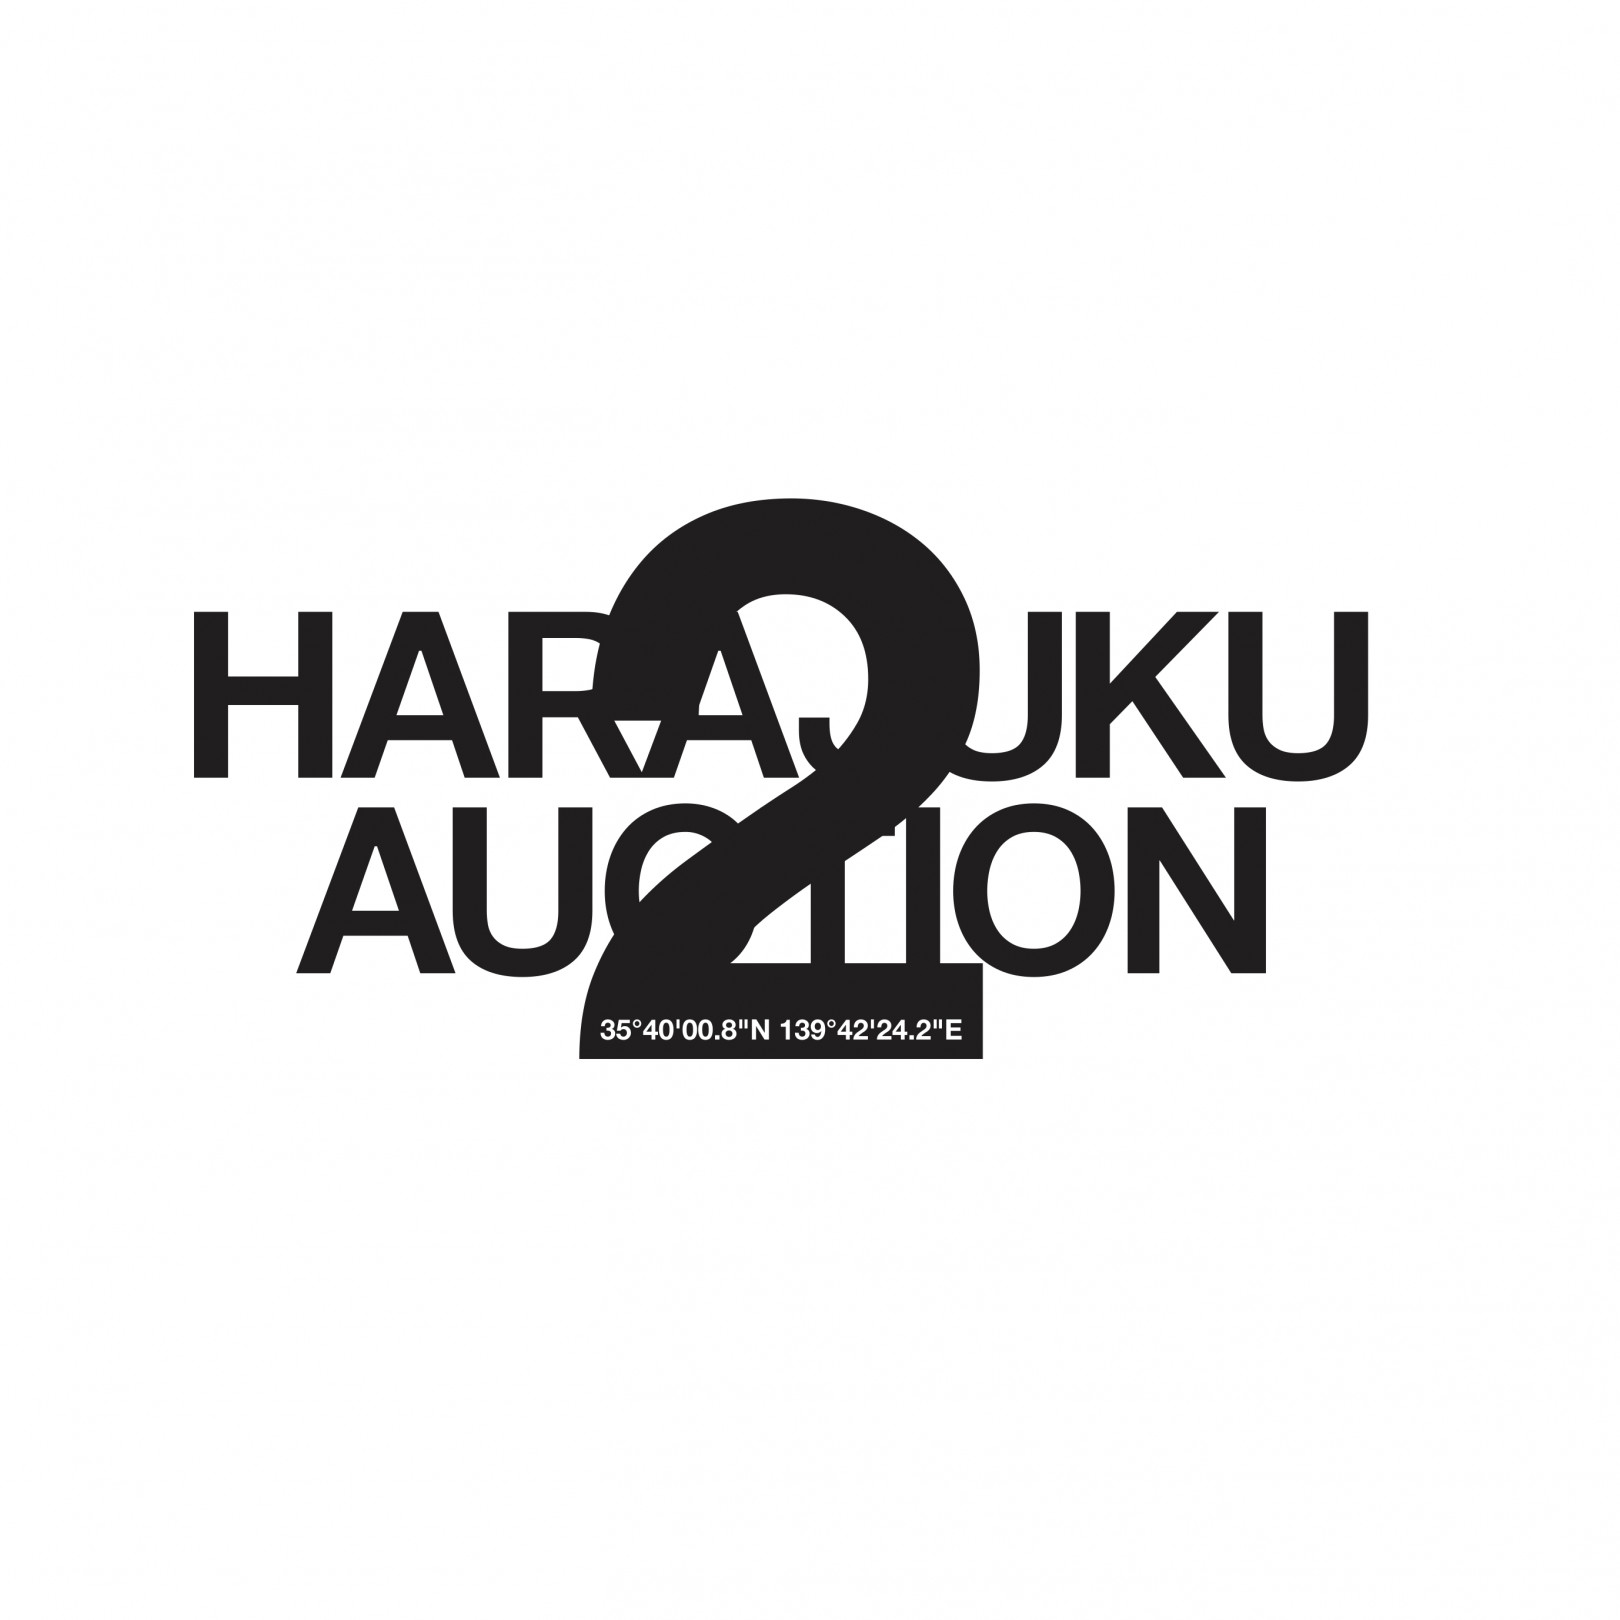 Harajuku Auction